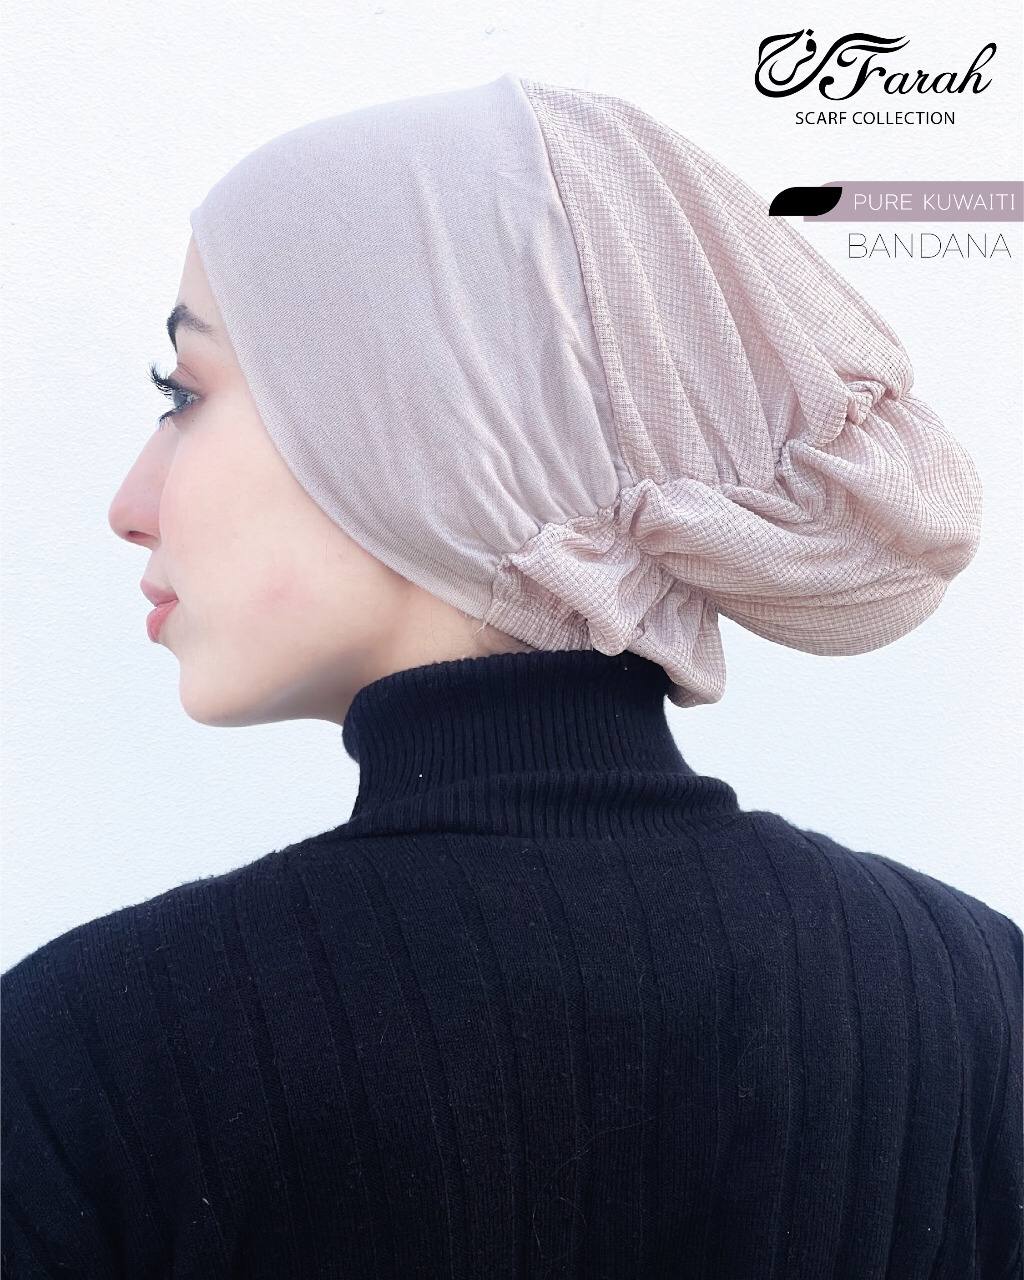 Elegant Cotton Hijab Frill Kuwaiti Bandana with Ruffles - Stylish Headscarf for Everyday Chic - Cold Turkey